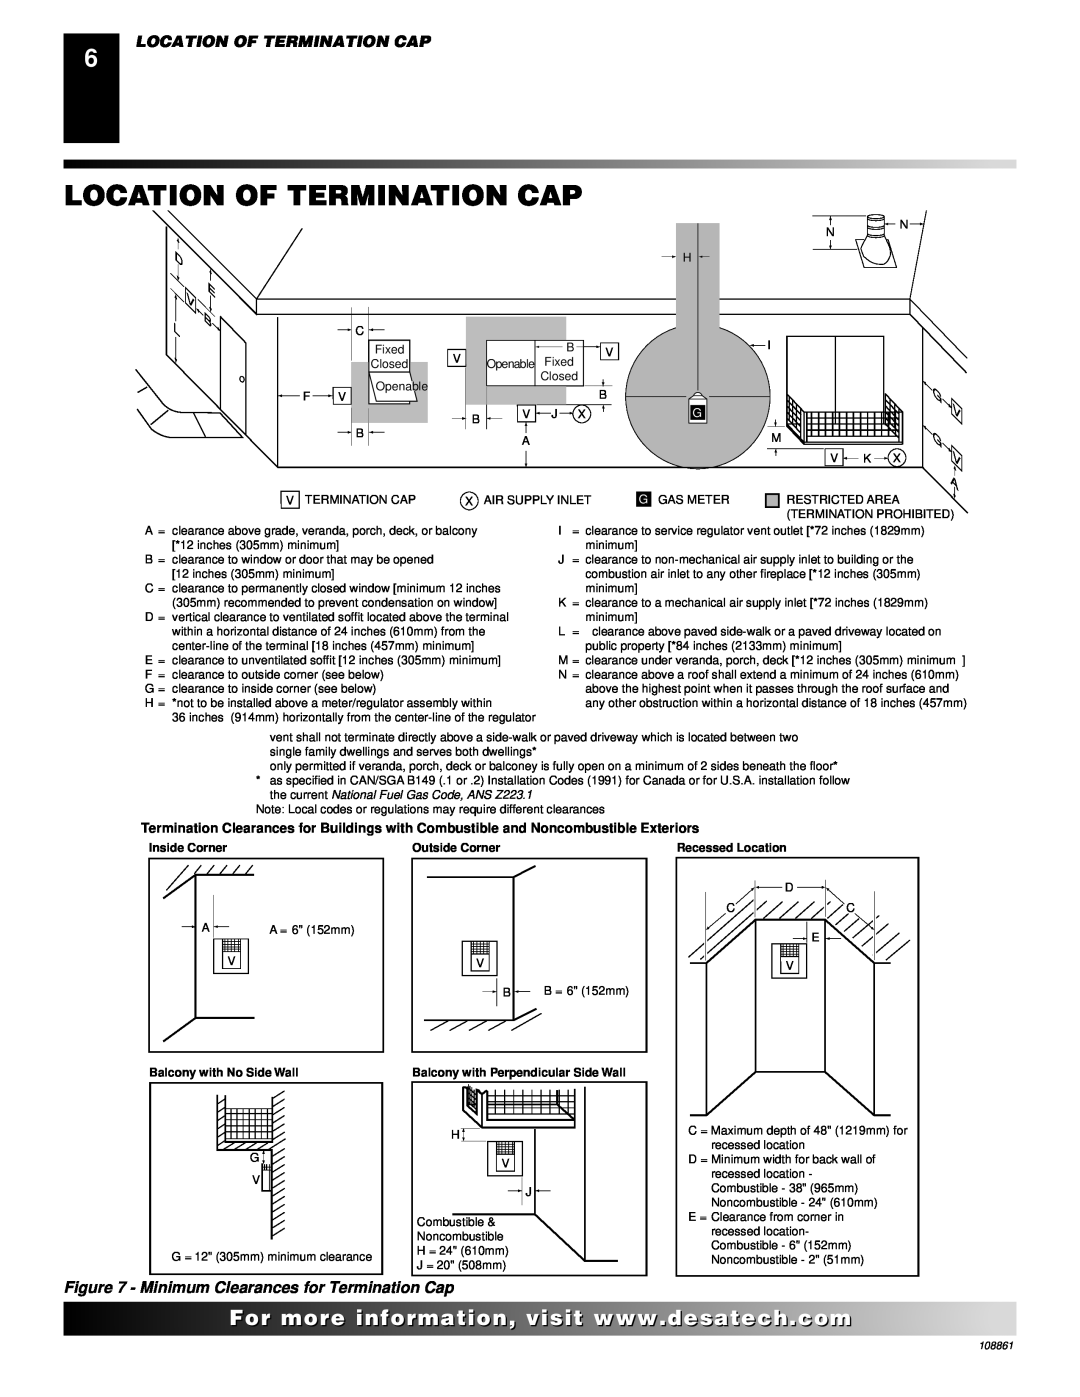 Desa (V)V36N Location Of Termination Cap, D E B L, V G V A, Minimum Clearances for Termination Cap, Inside Corner 